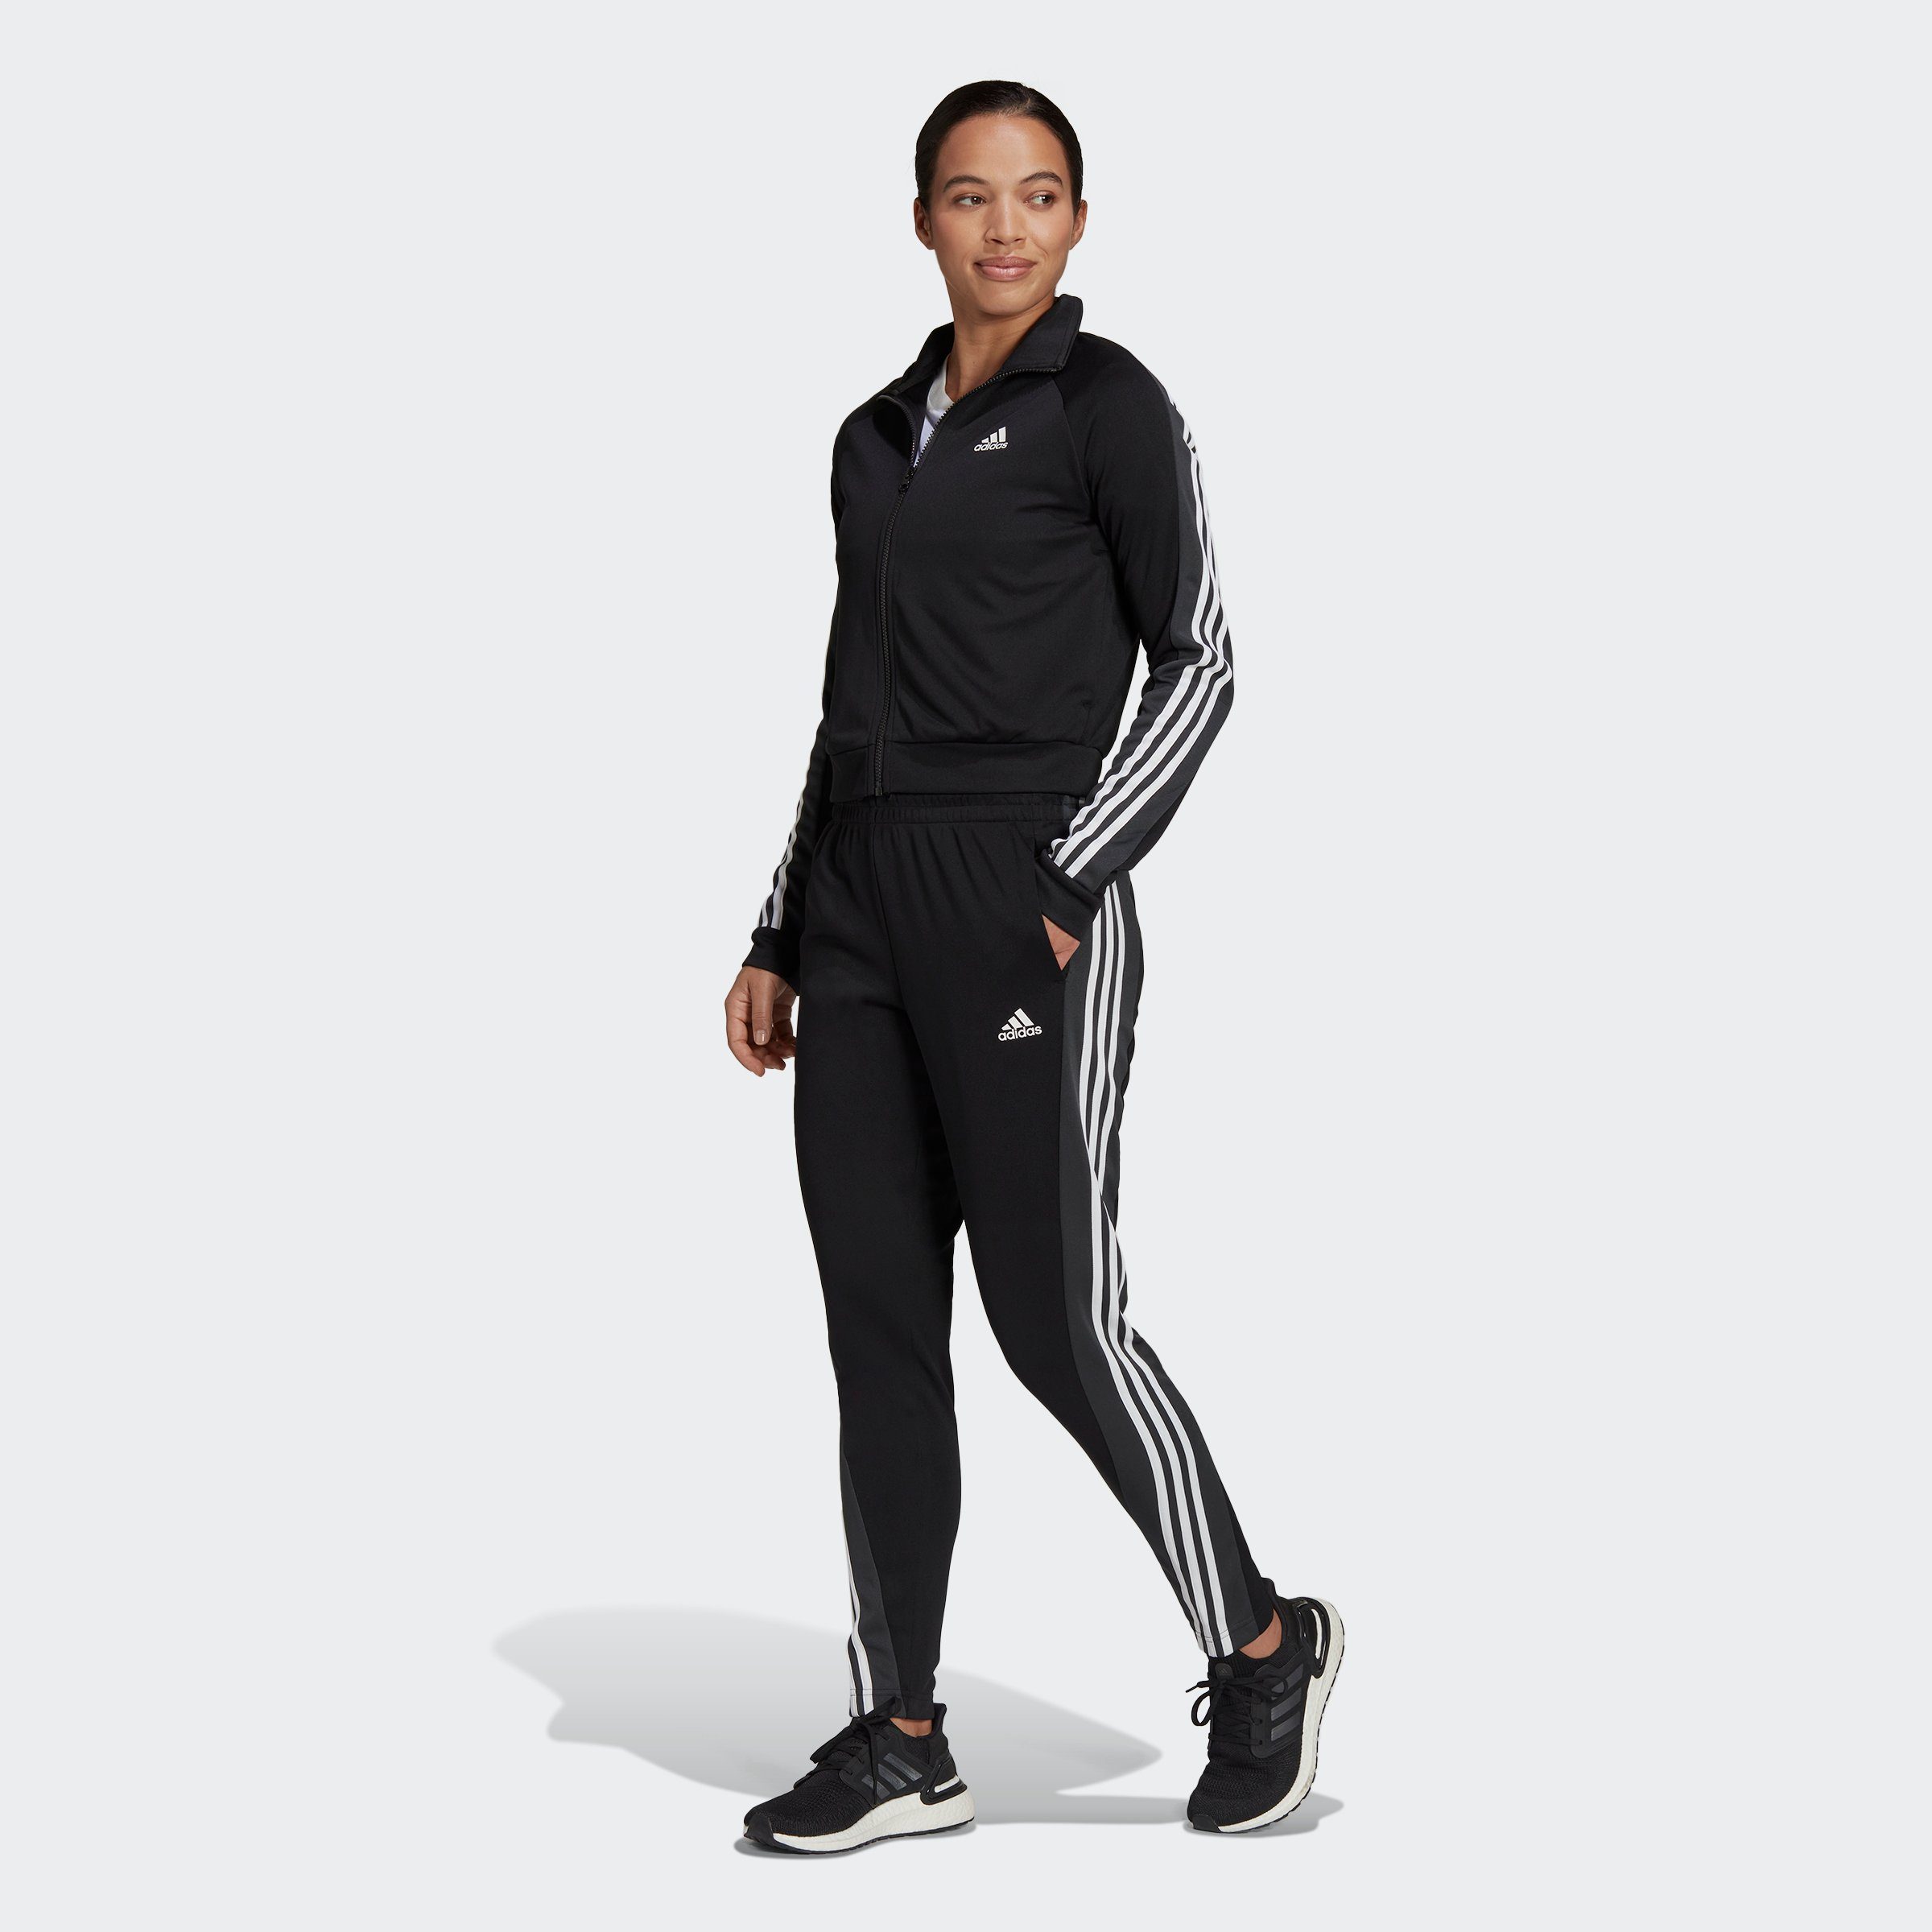 Damen Trainingsanzüge kaufen » Damen Jogginganzüge | OTTO